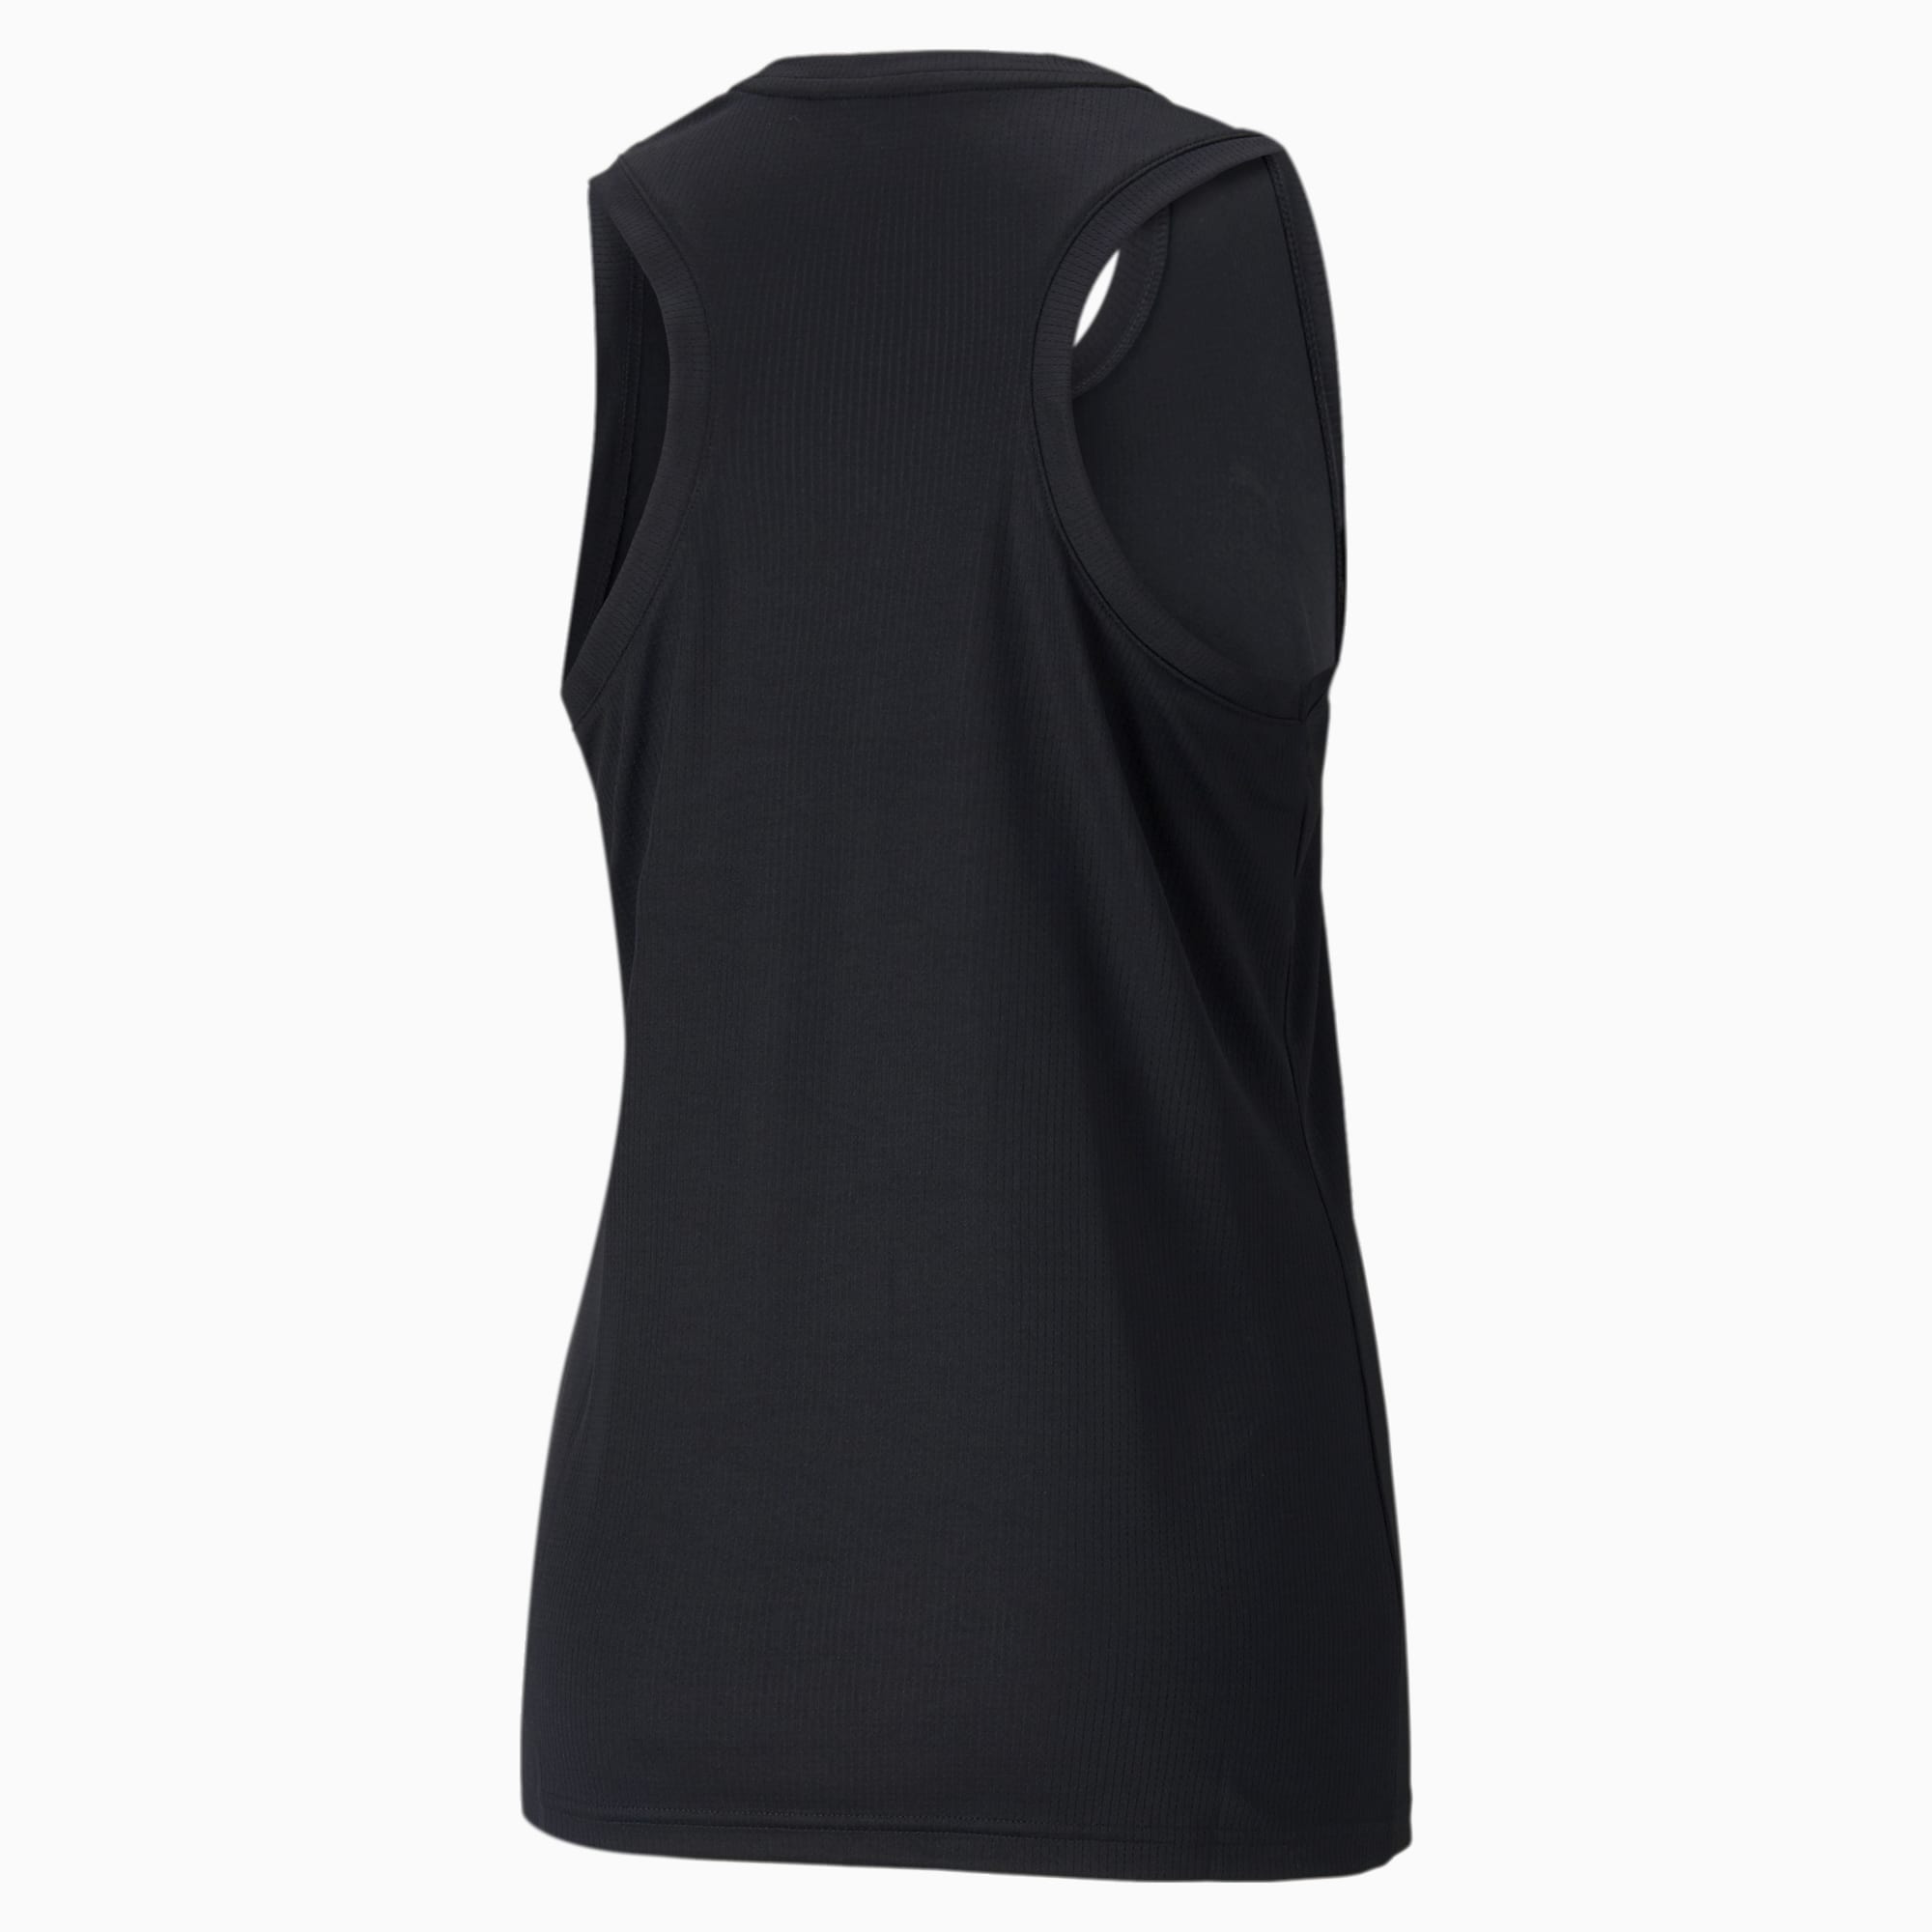 PUMA Performance Women's Training Tank Top Shirt, Black, Size S, Clothing